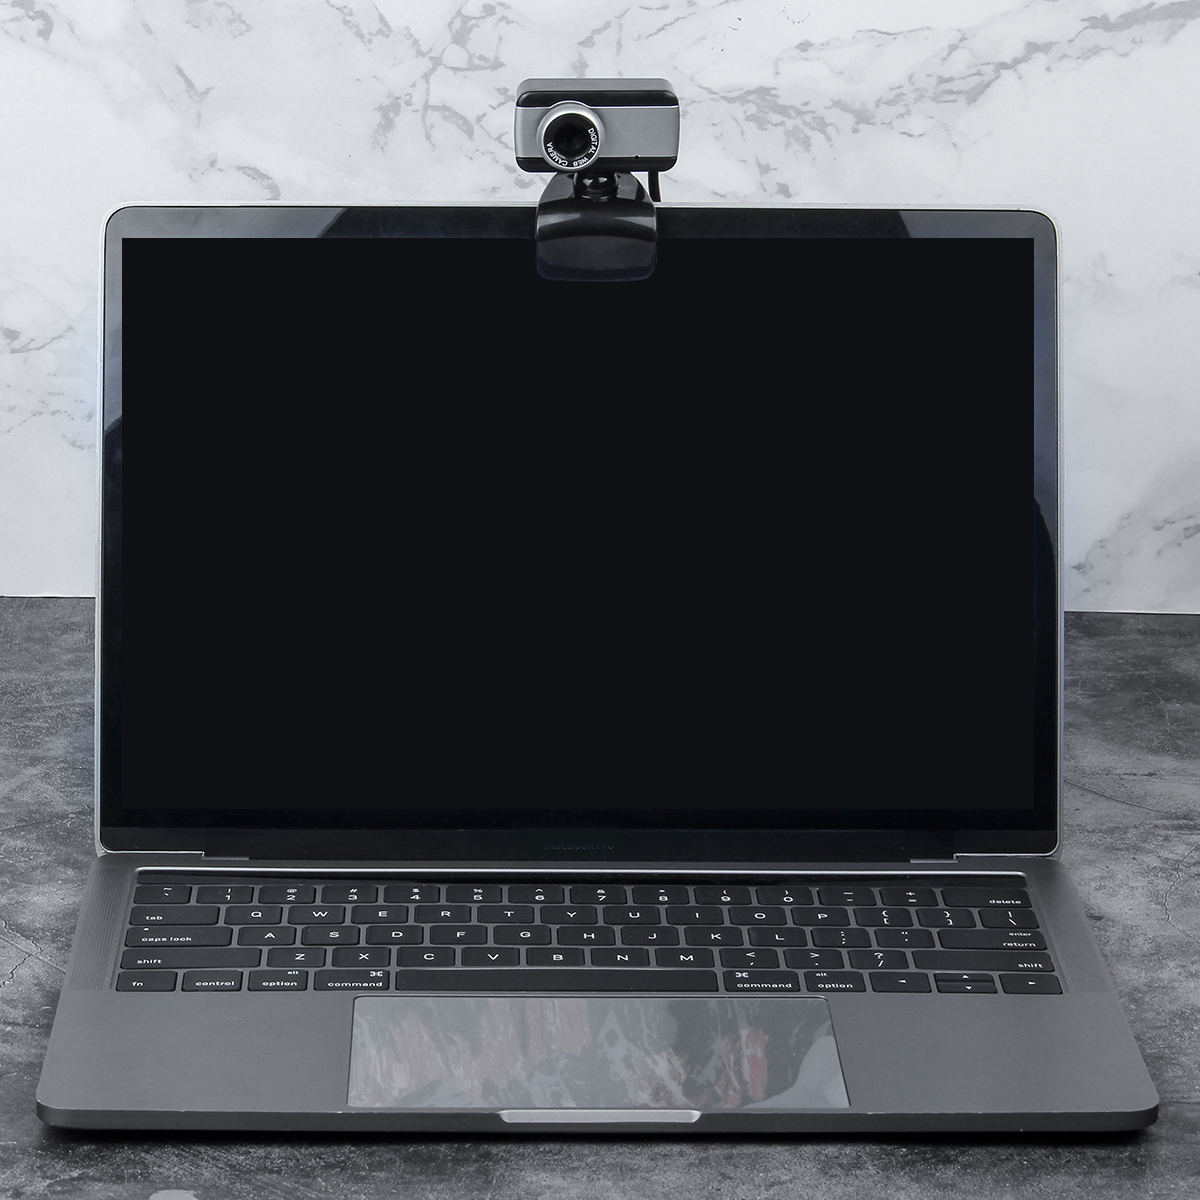 HD-USB-Desktop-Computer-Laptop-Digital-Full-Web-Camera-Webcam-Cam-W-Microphone-1679724-3